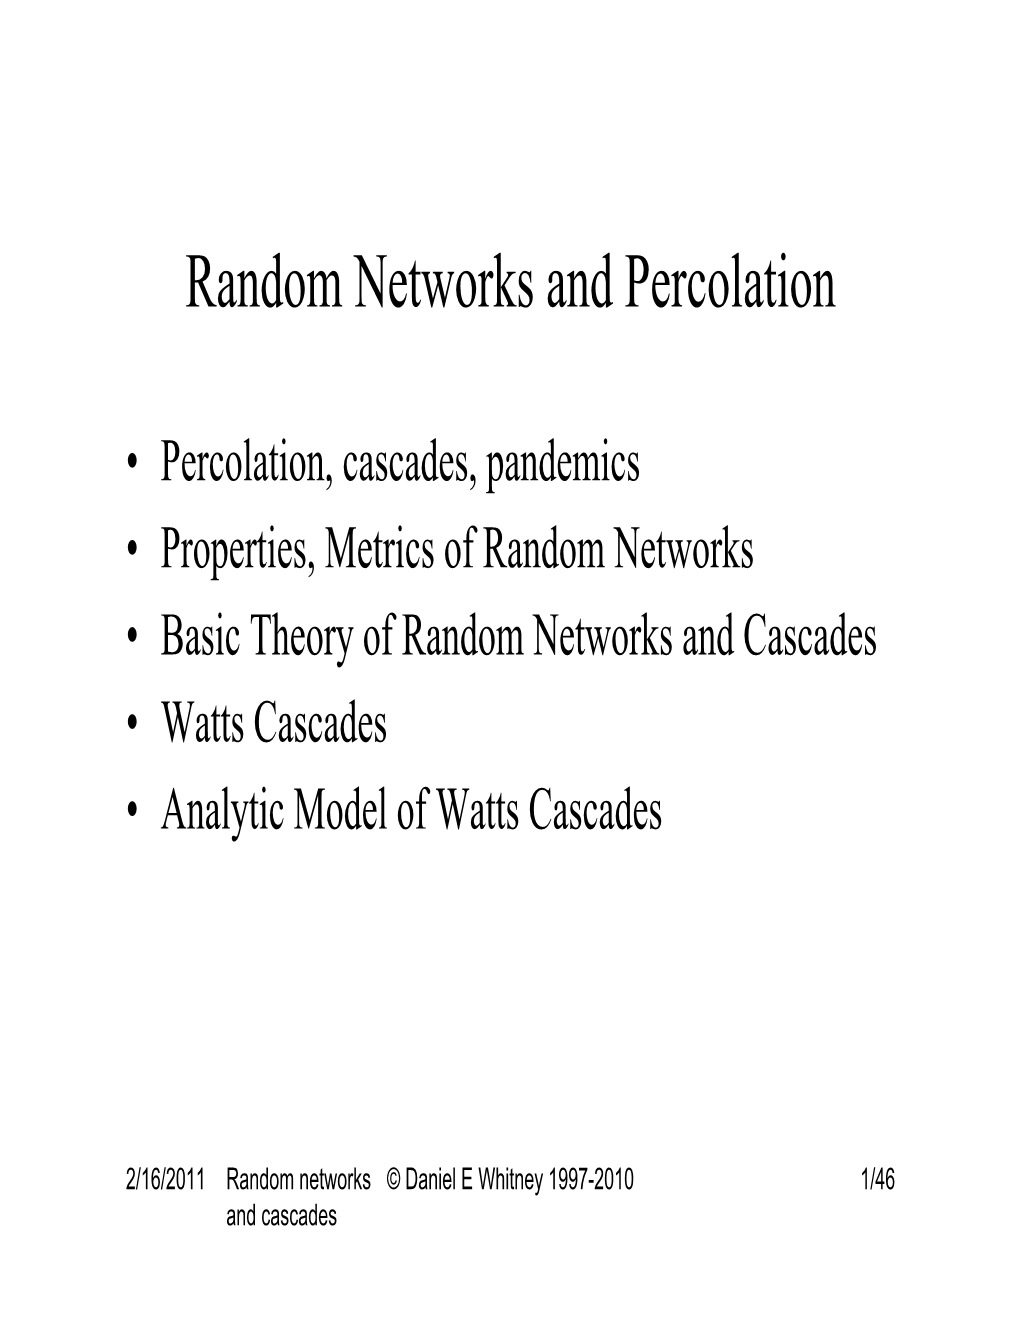 ESD.342 Random Networks Lecture 13